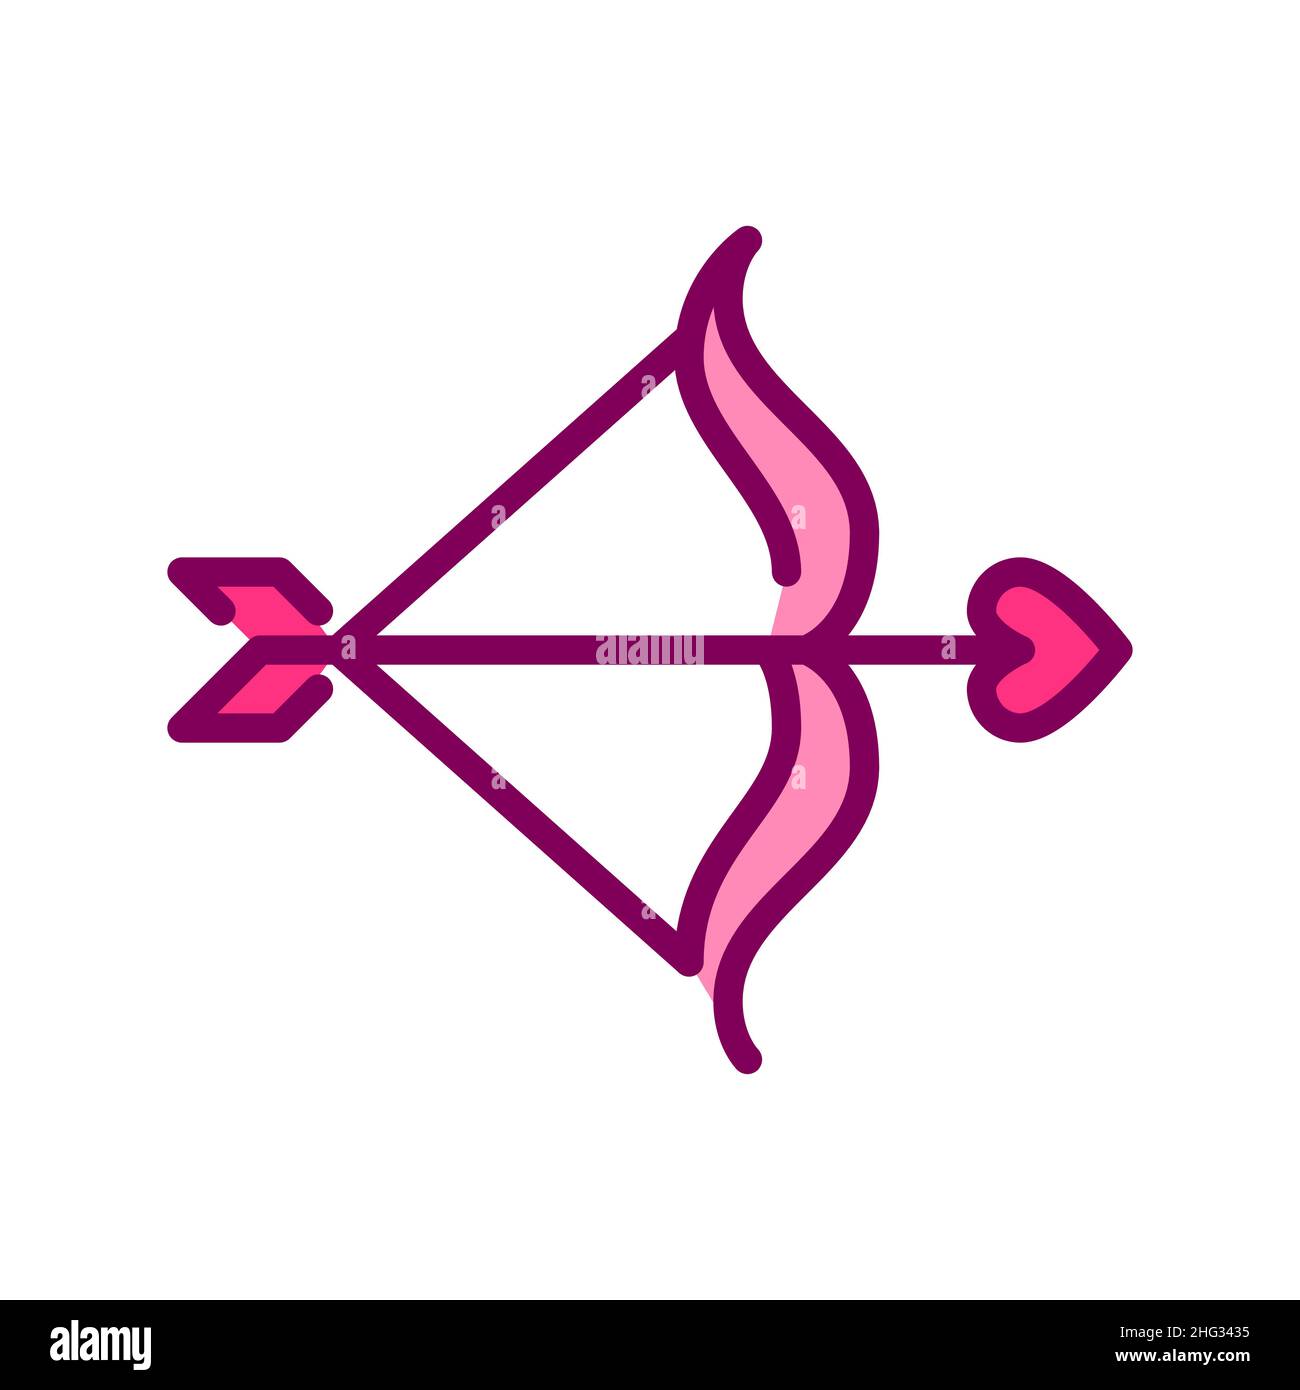 Arco Cupido e icono de flecha. Símbolo romántico del día de San